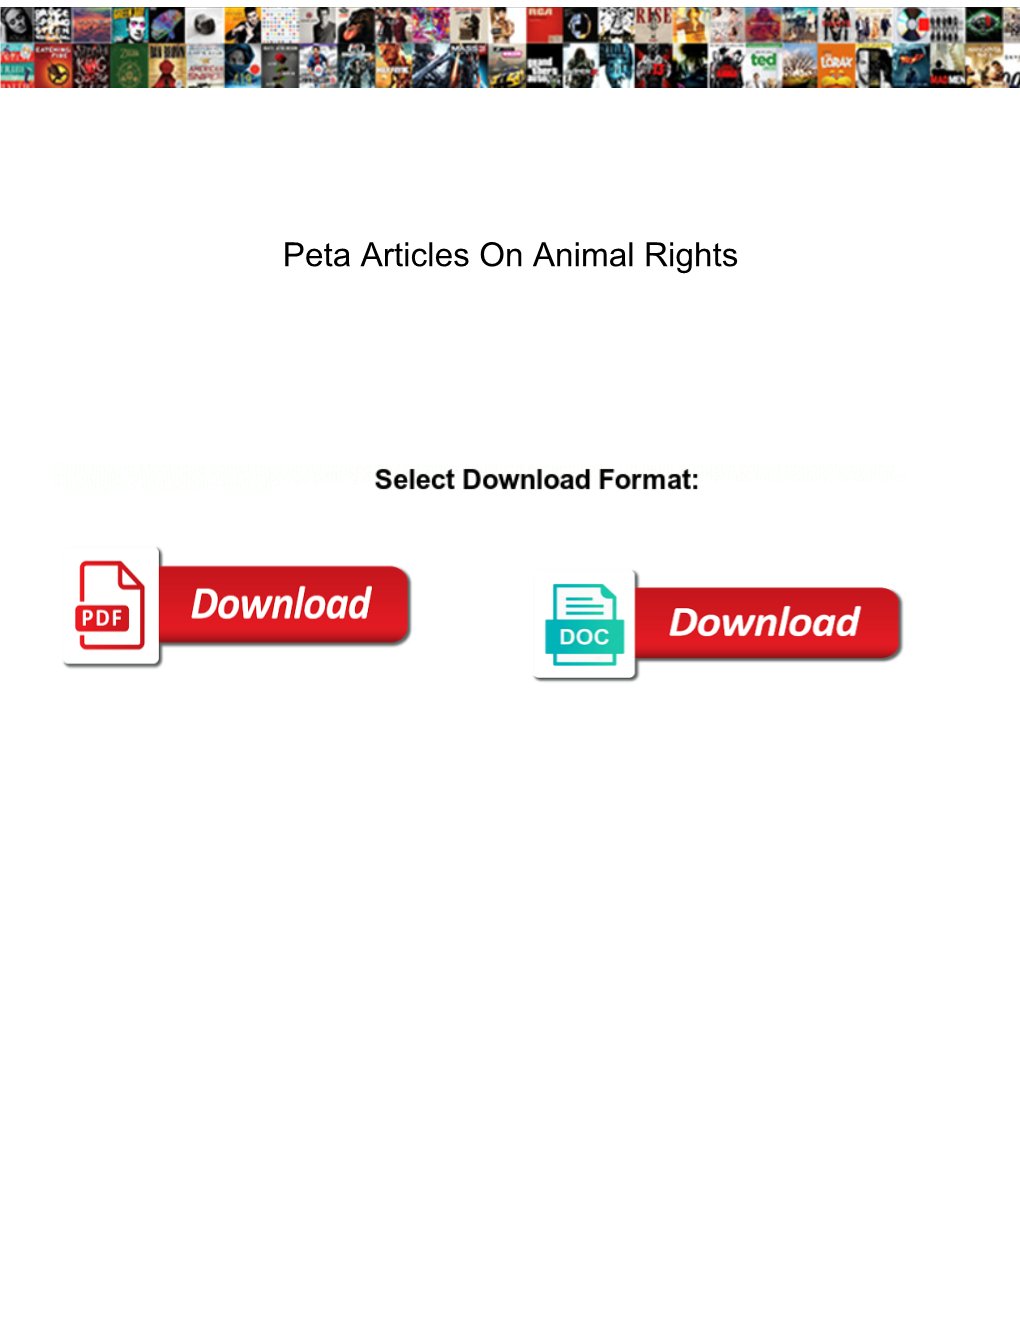 Peta Articles on Animal Rights